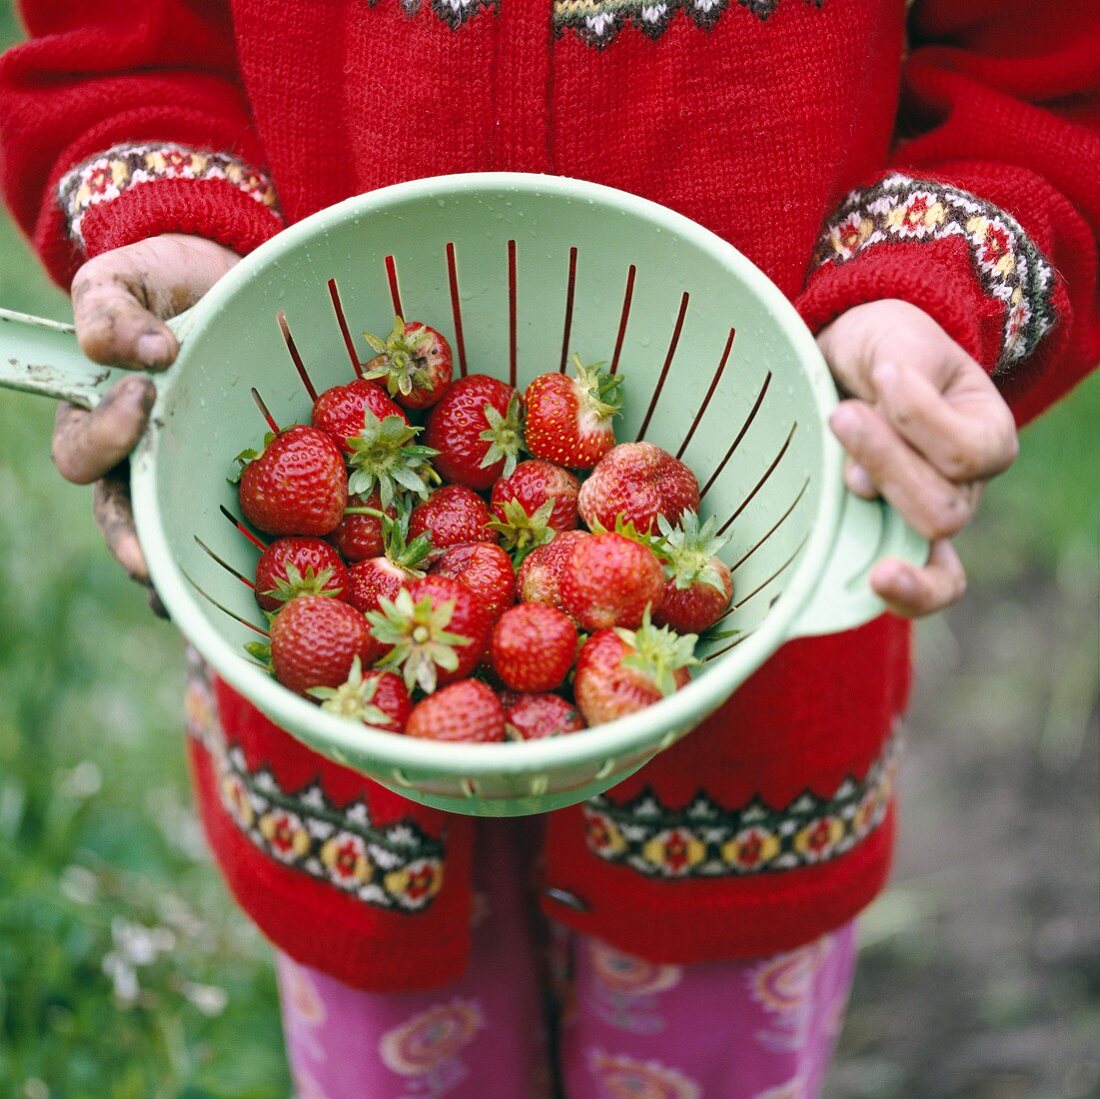 Mädchen hält Erdbeeren im Plastiksieb